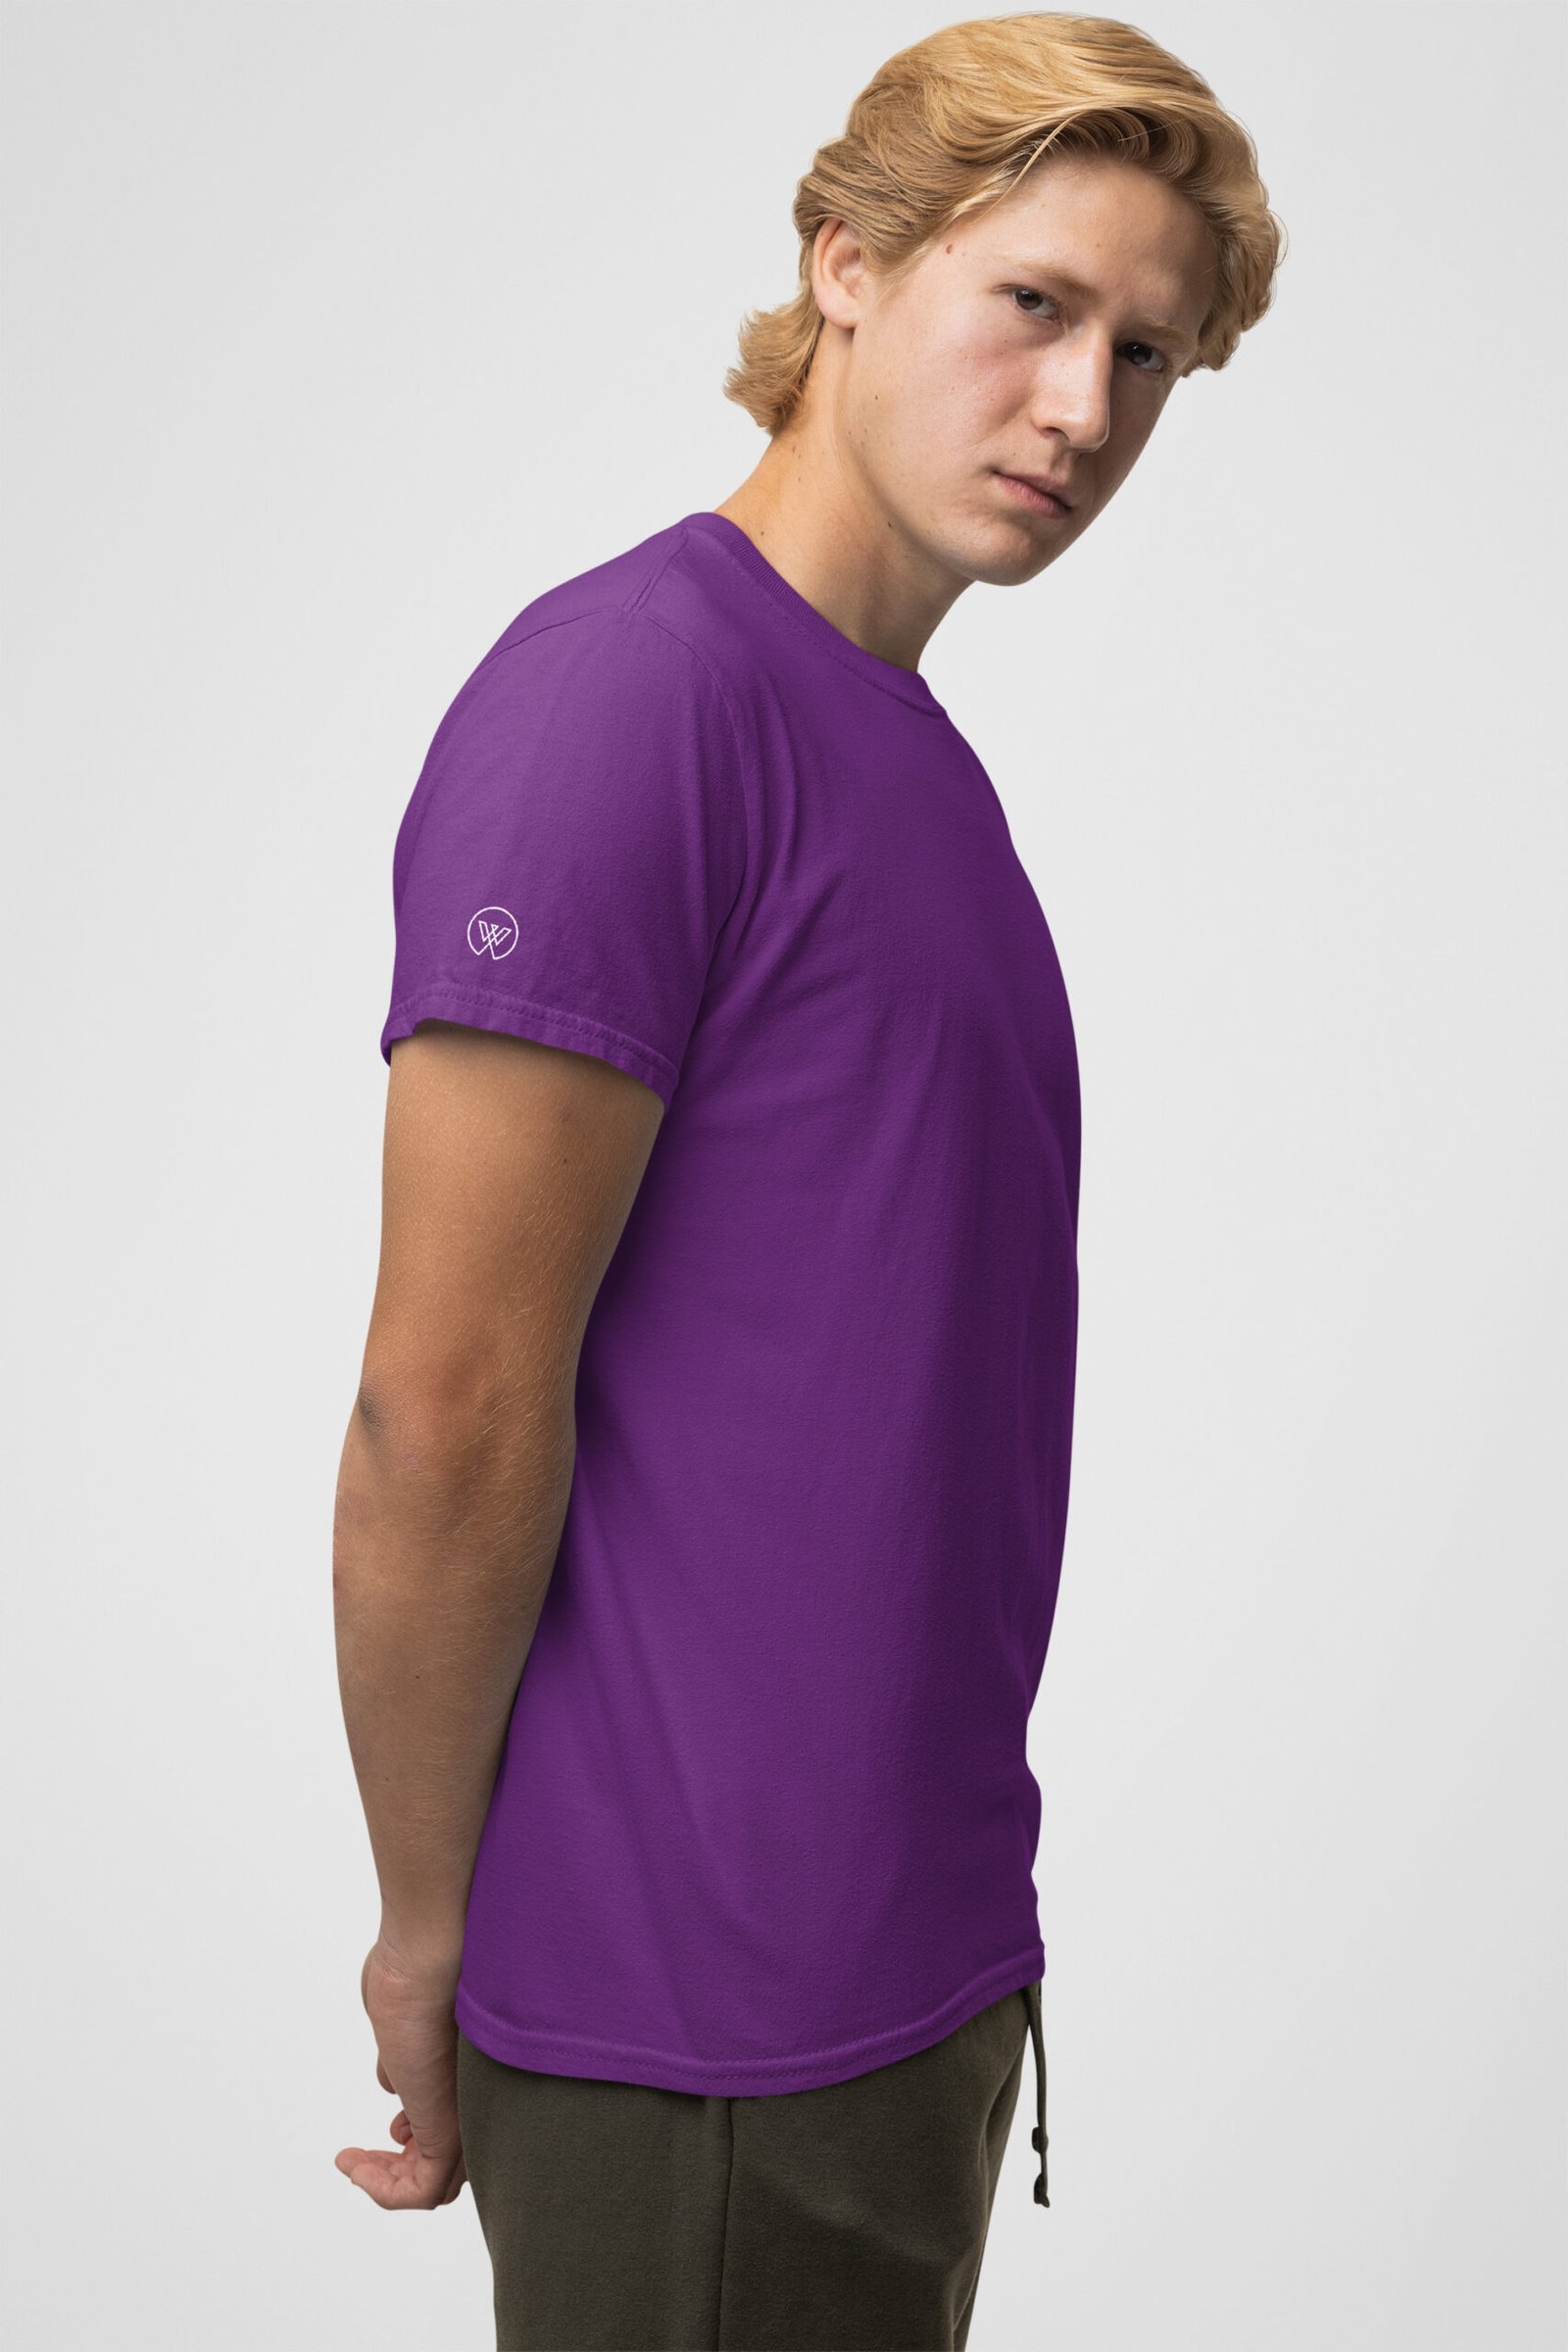 Purple Solid T-Shirt by Wayward Wayz Side